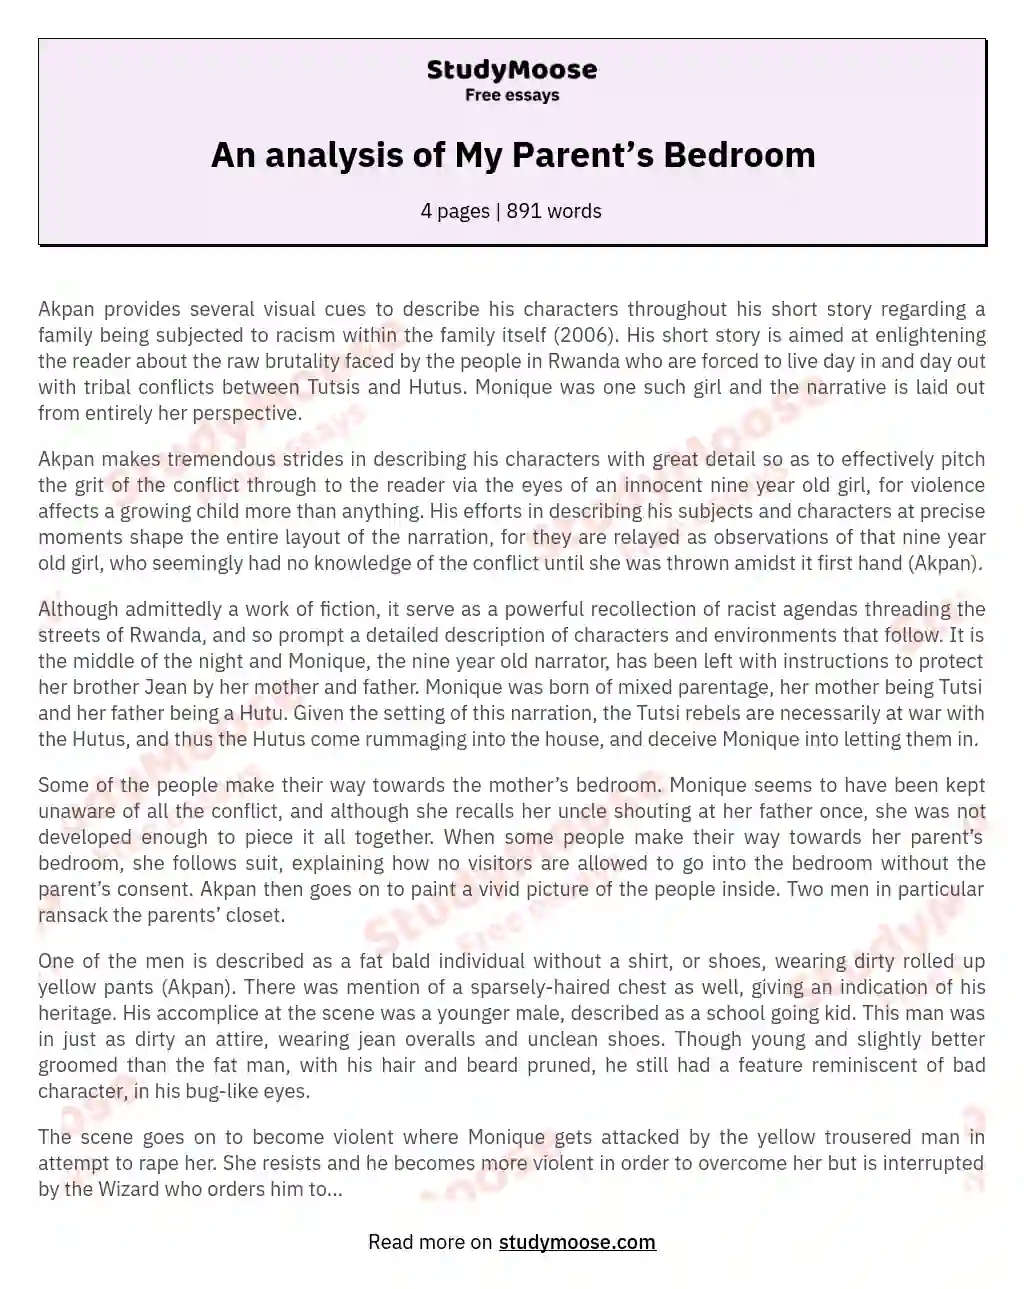 An analysis of My Parent’s Bedroom essay